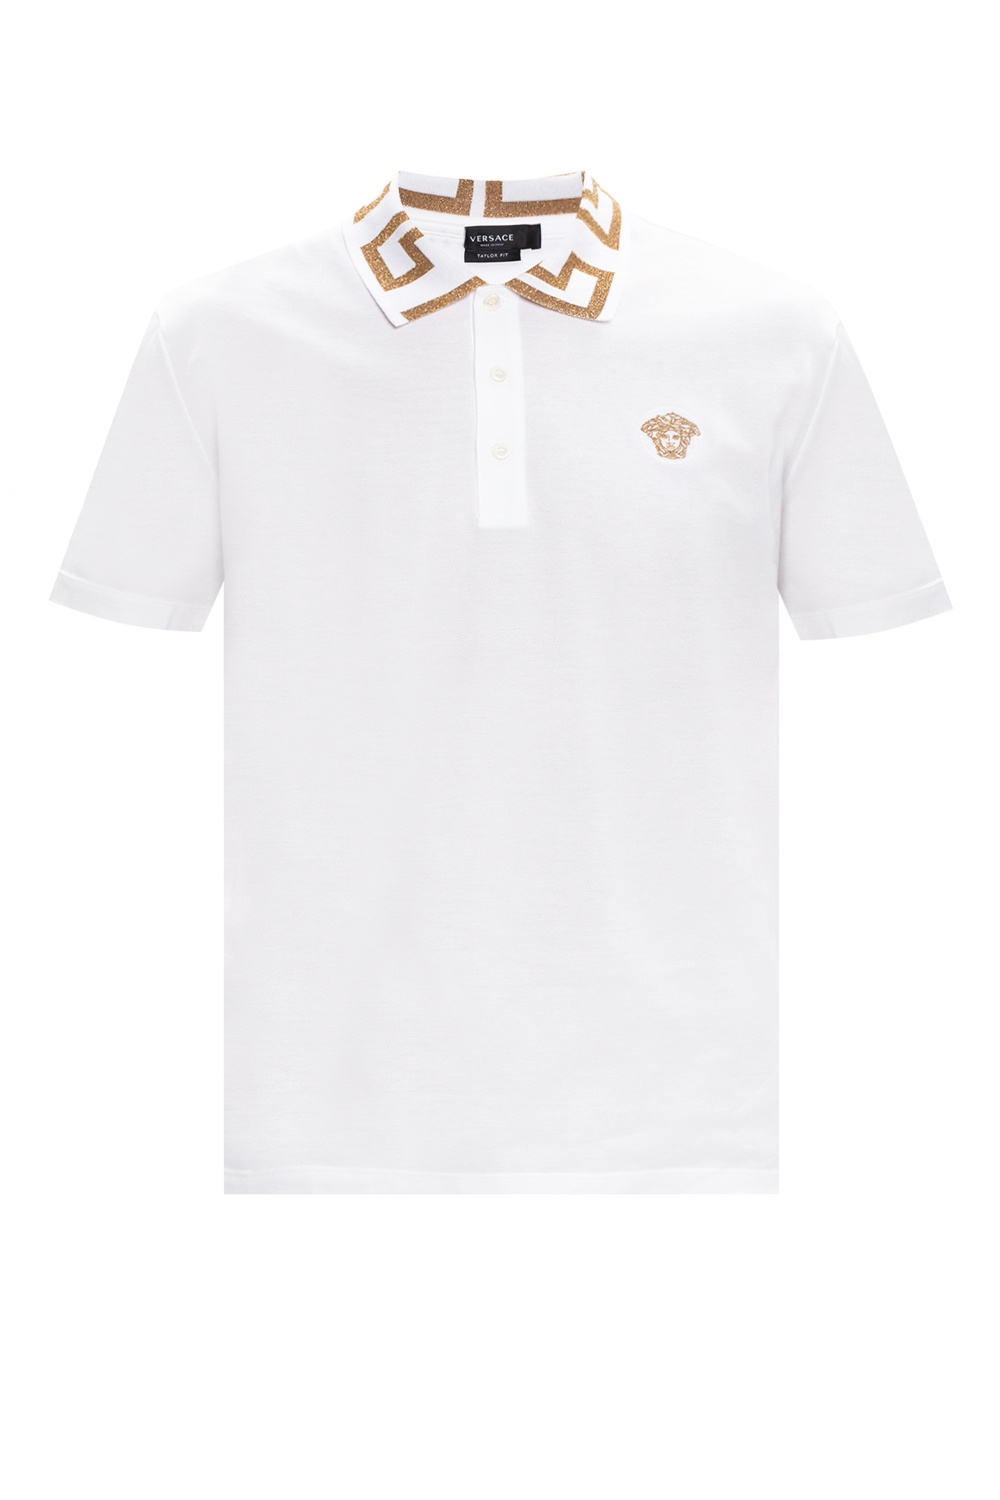 versace polo shirt white